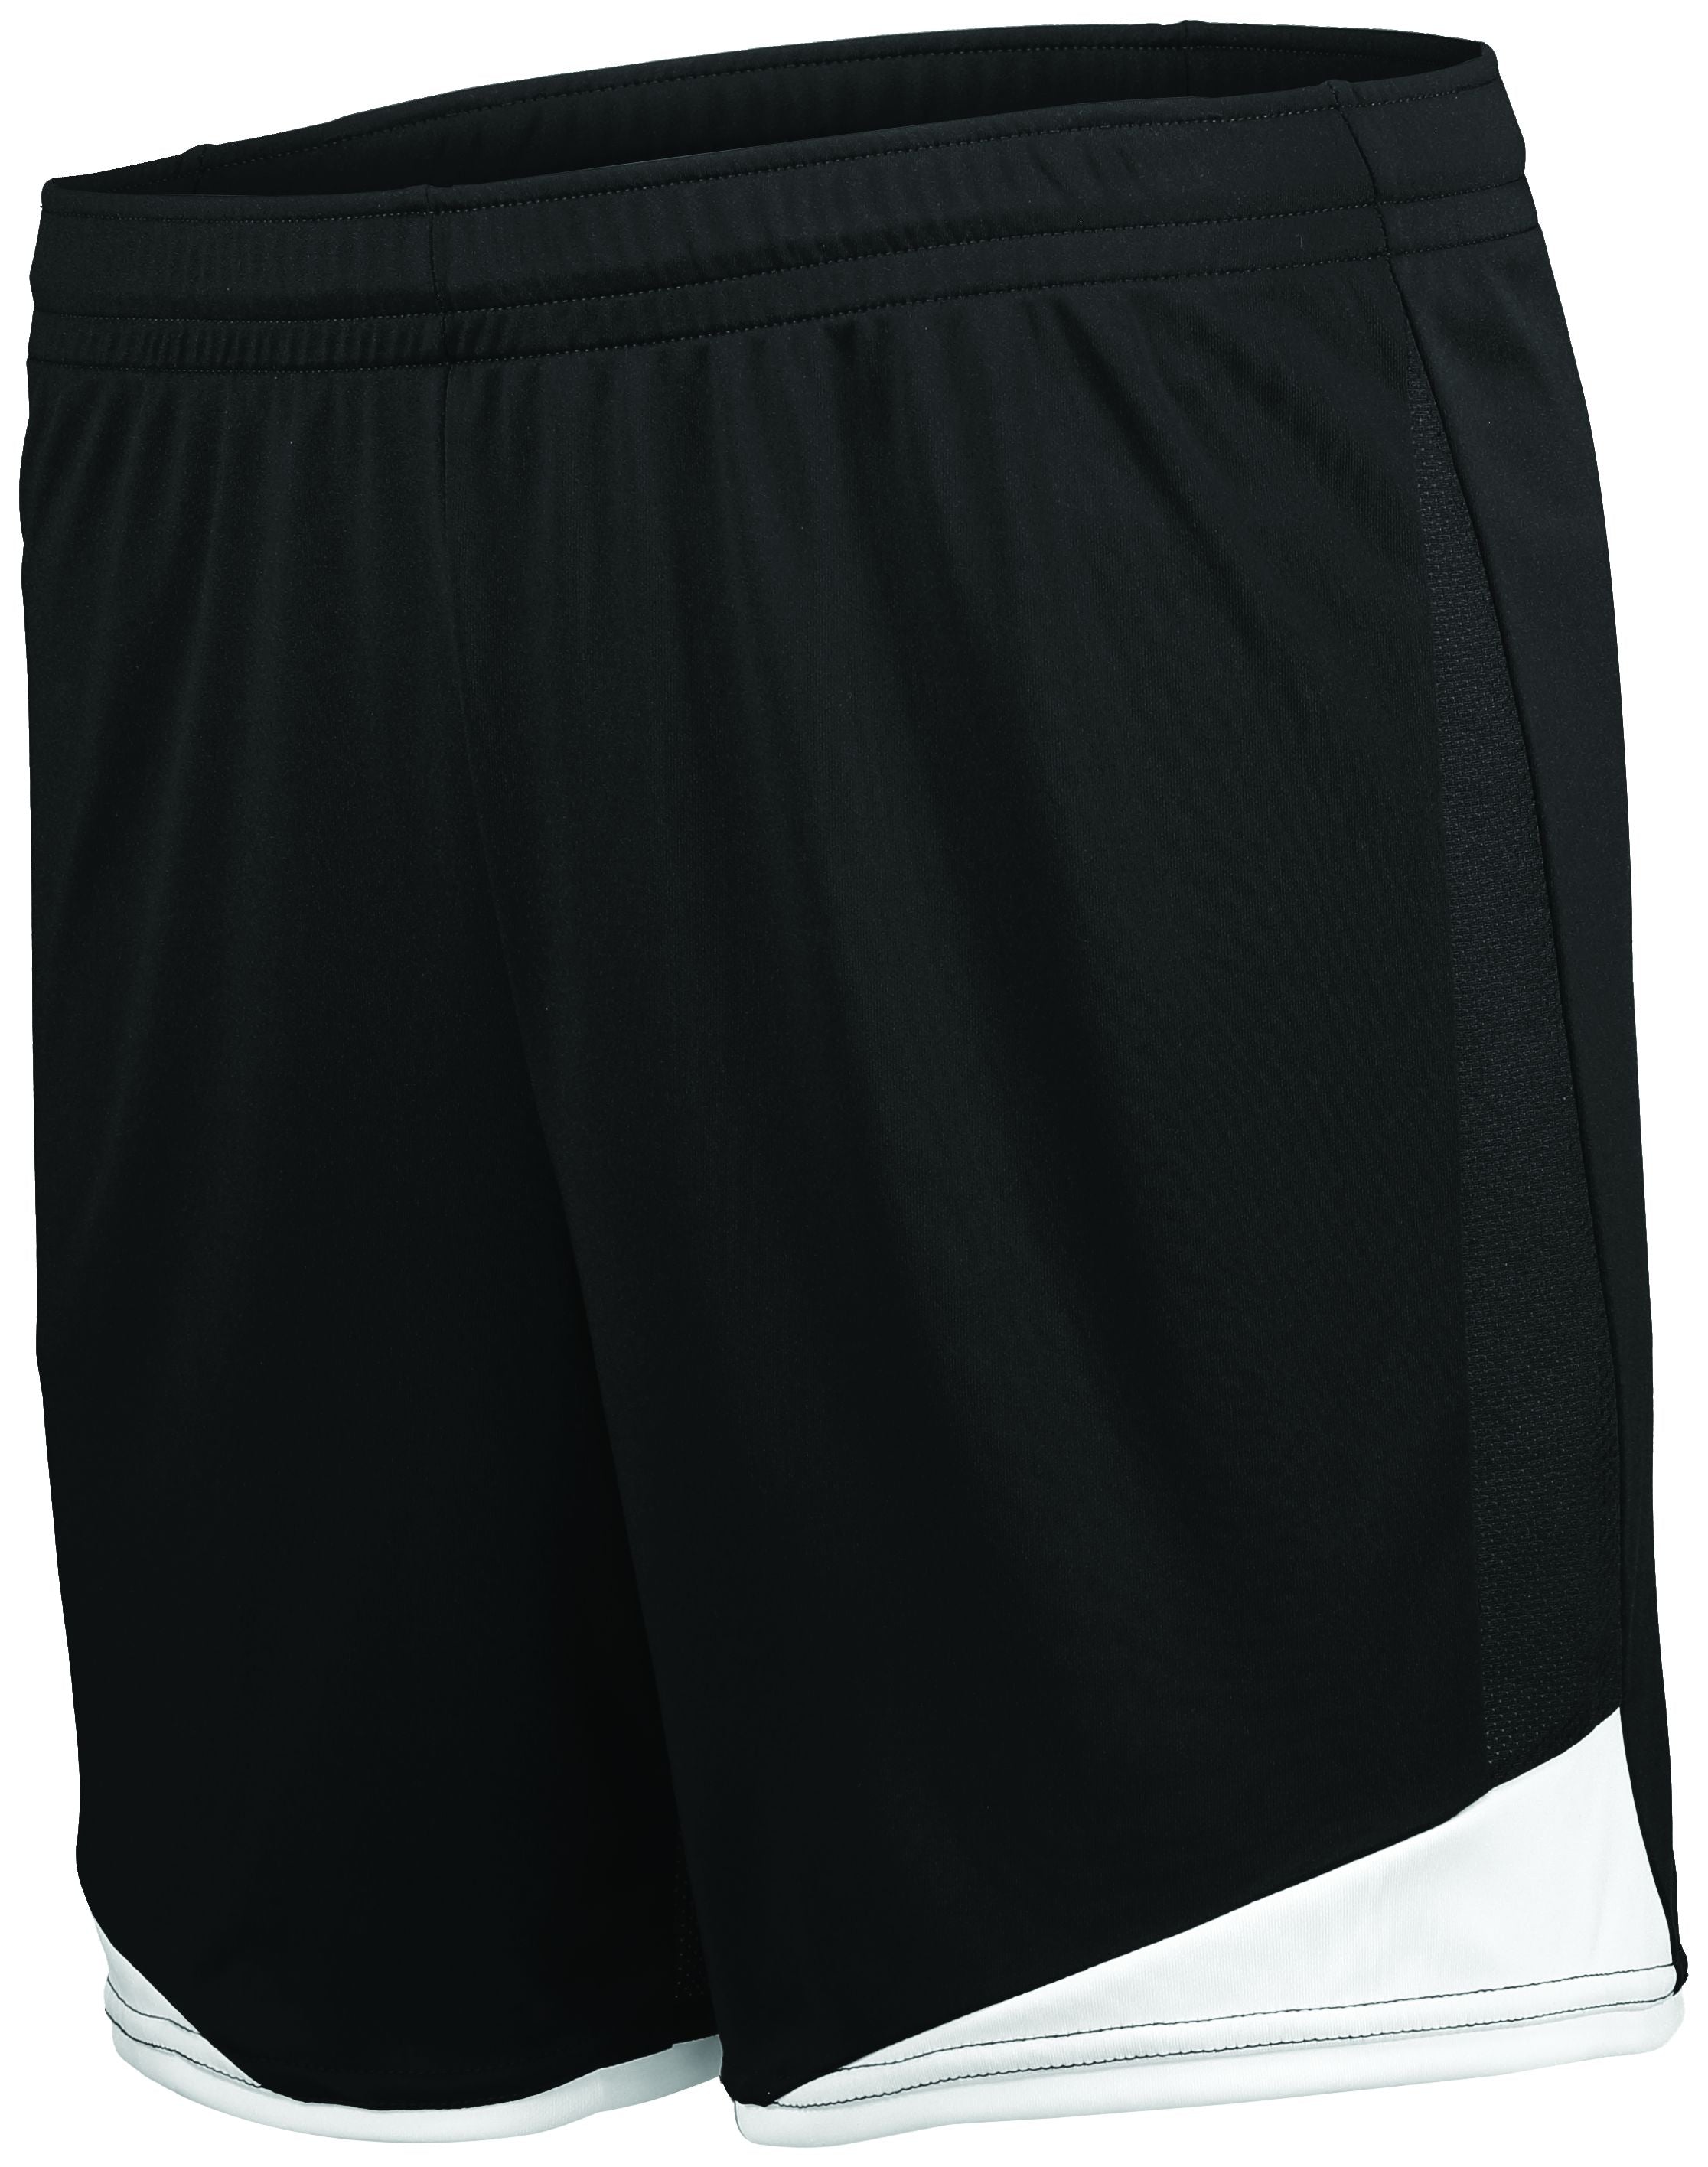 High 5 Ladies Stamford Soccer Shorts